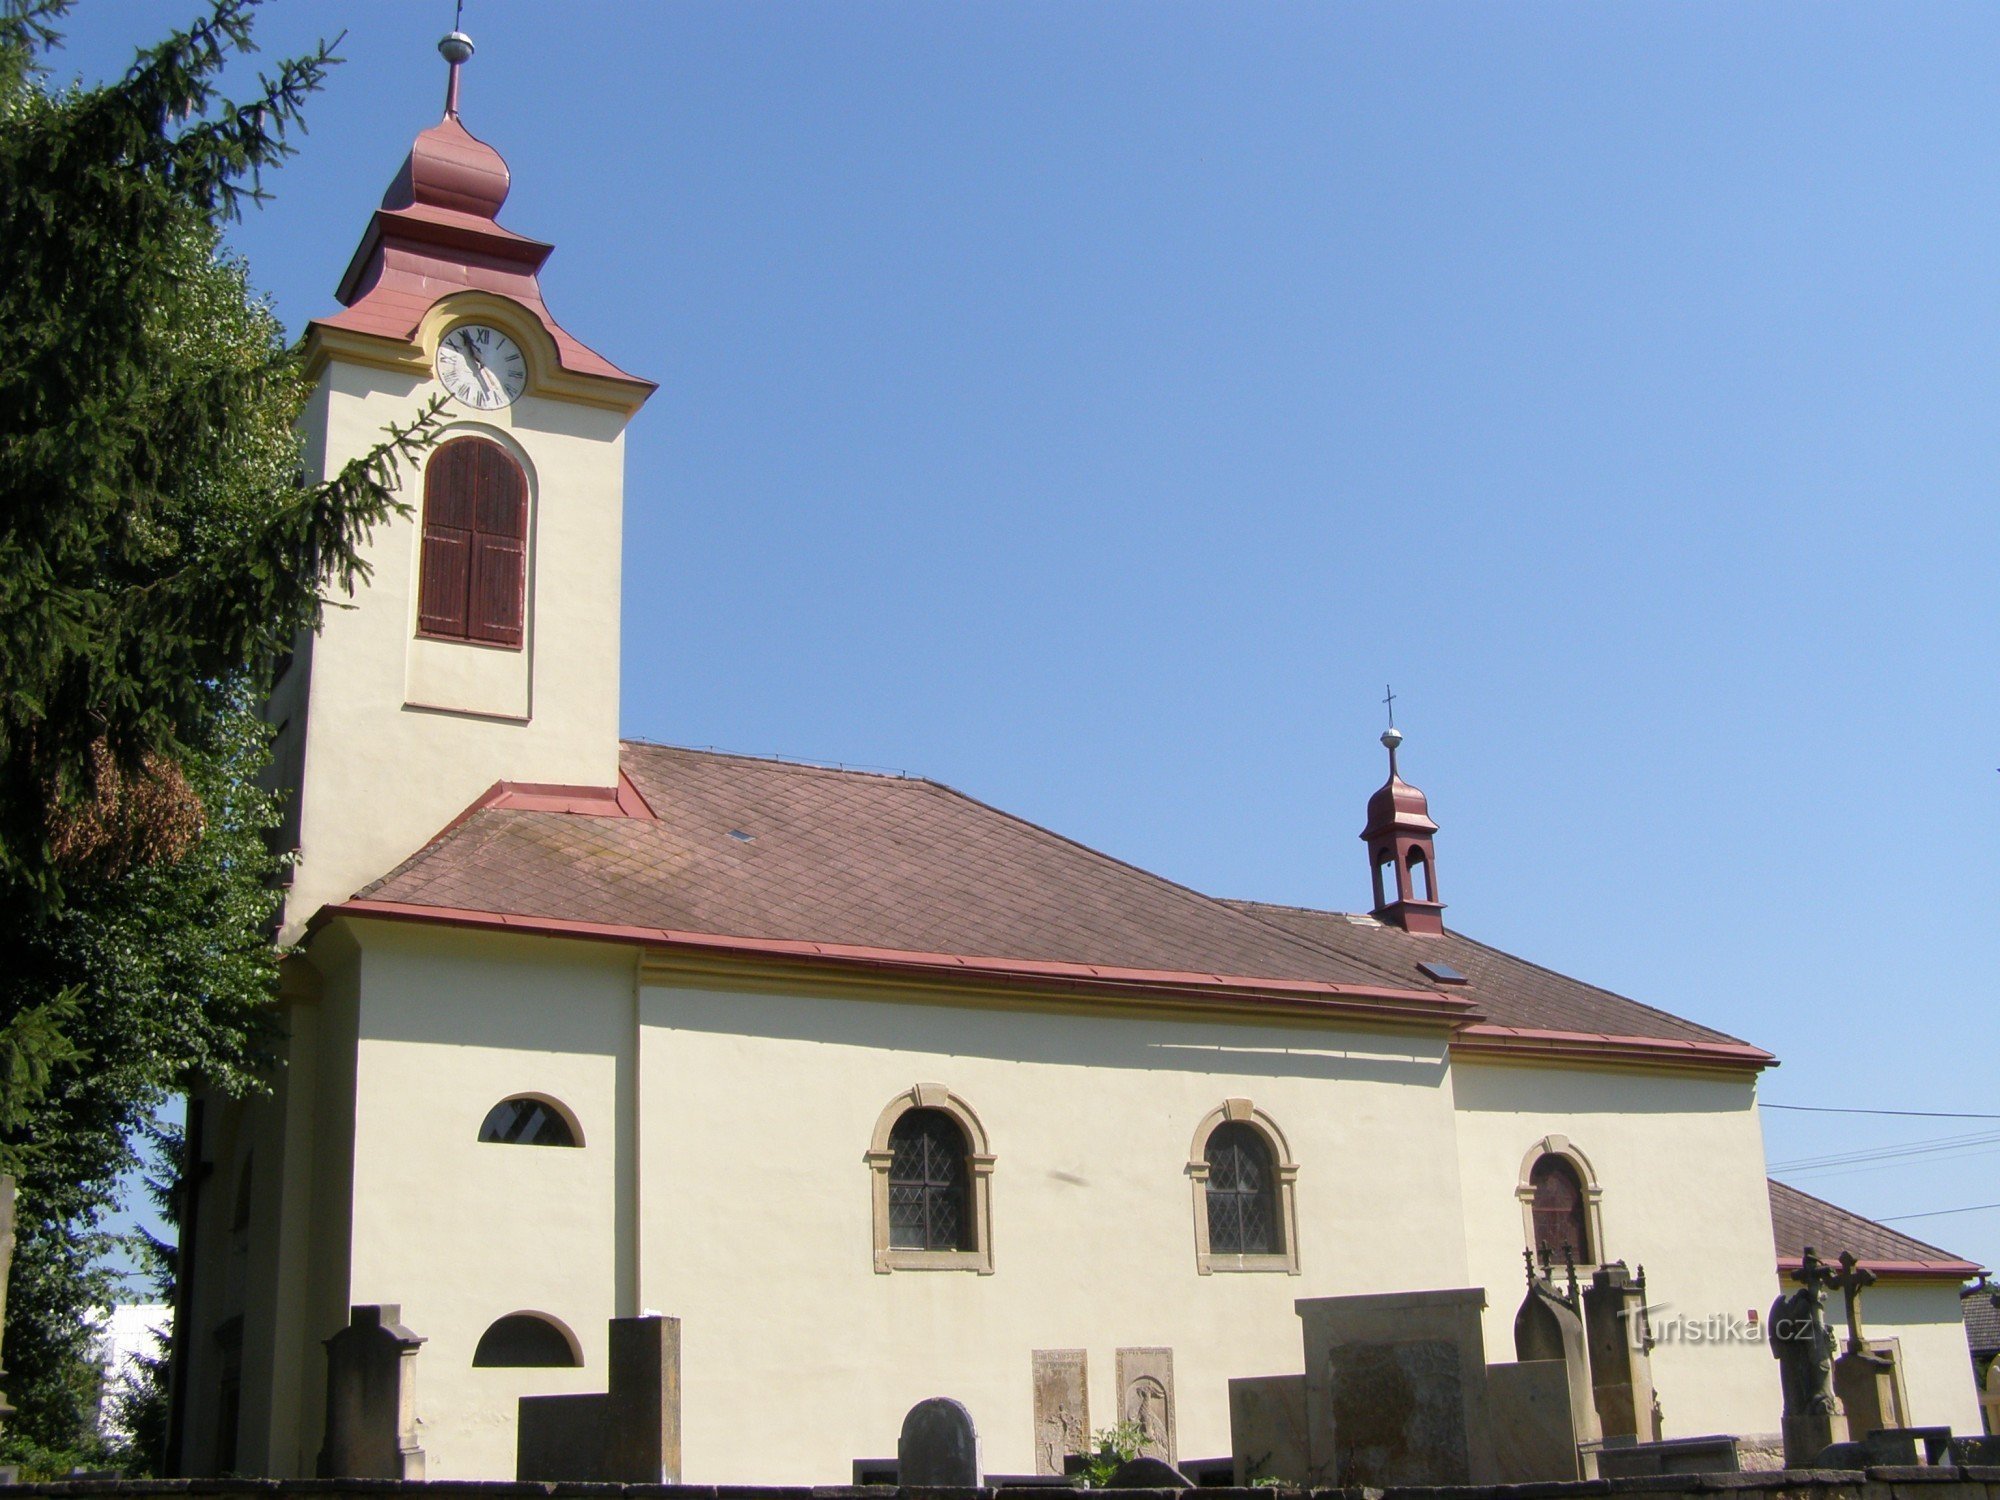 Choteč - Église de St. Nicolas